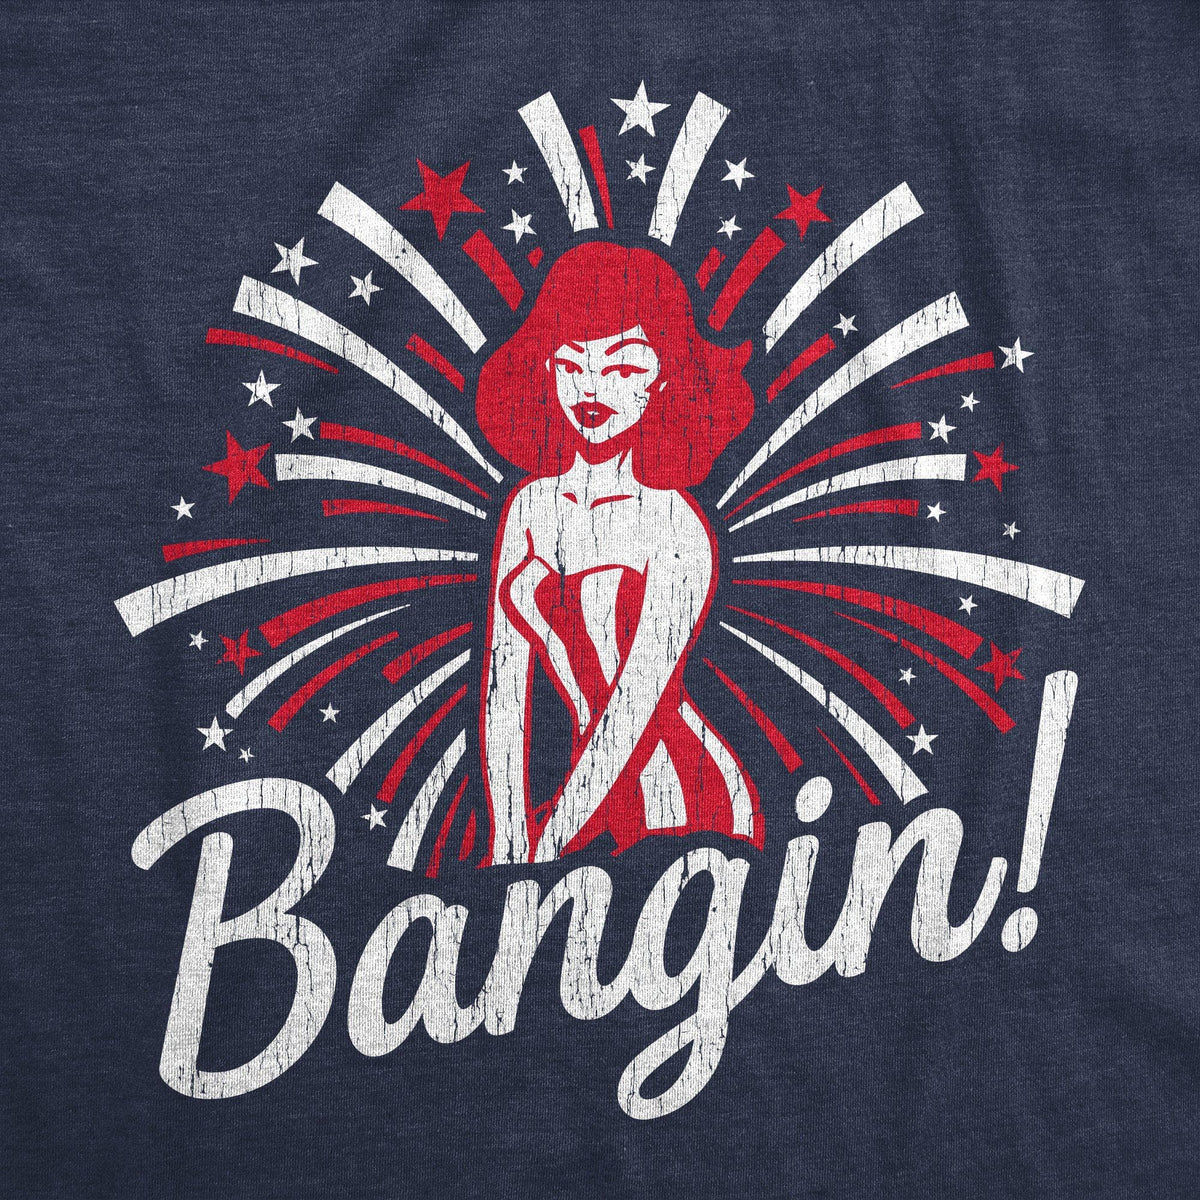 Bangin! Women&#39;s Tshirt - Crazy Dog T-Shirts